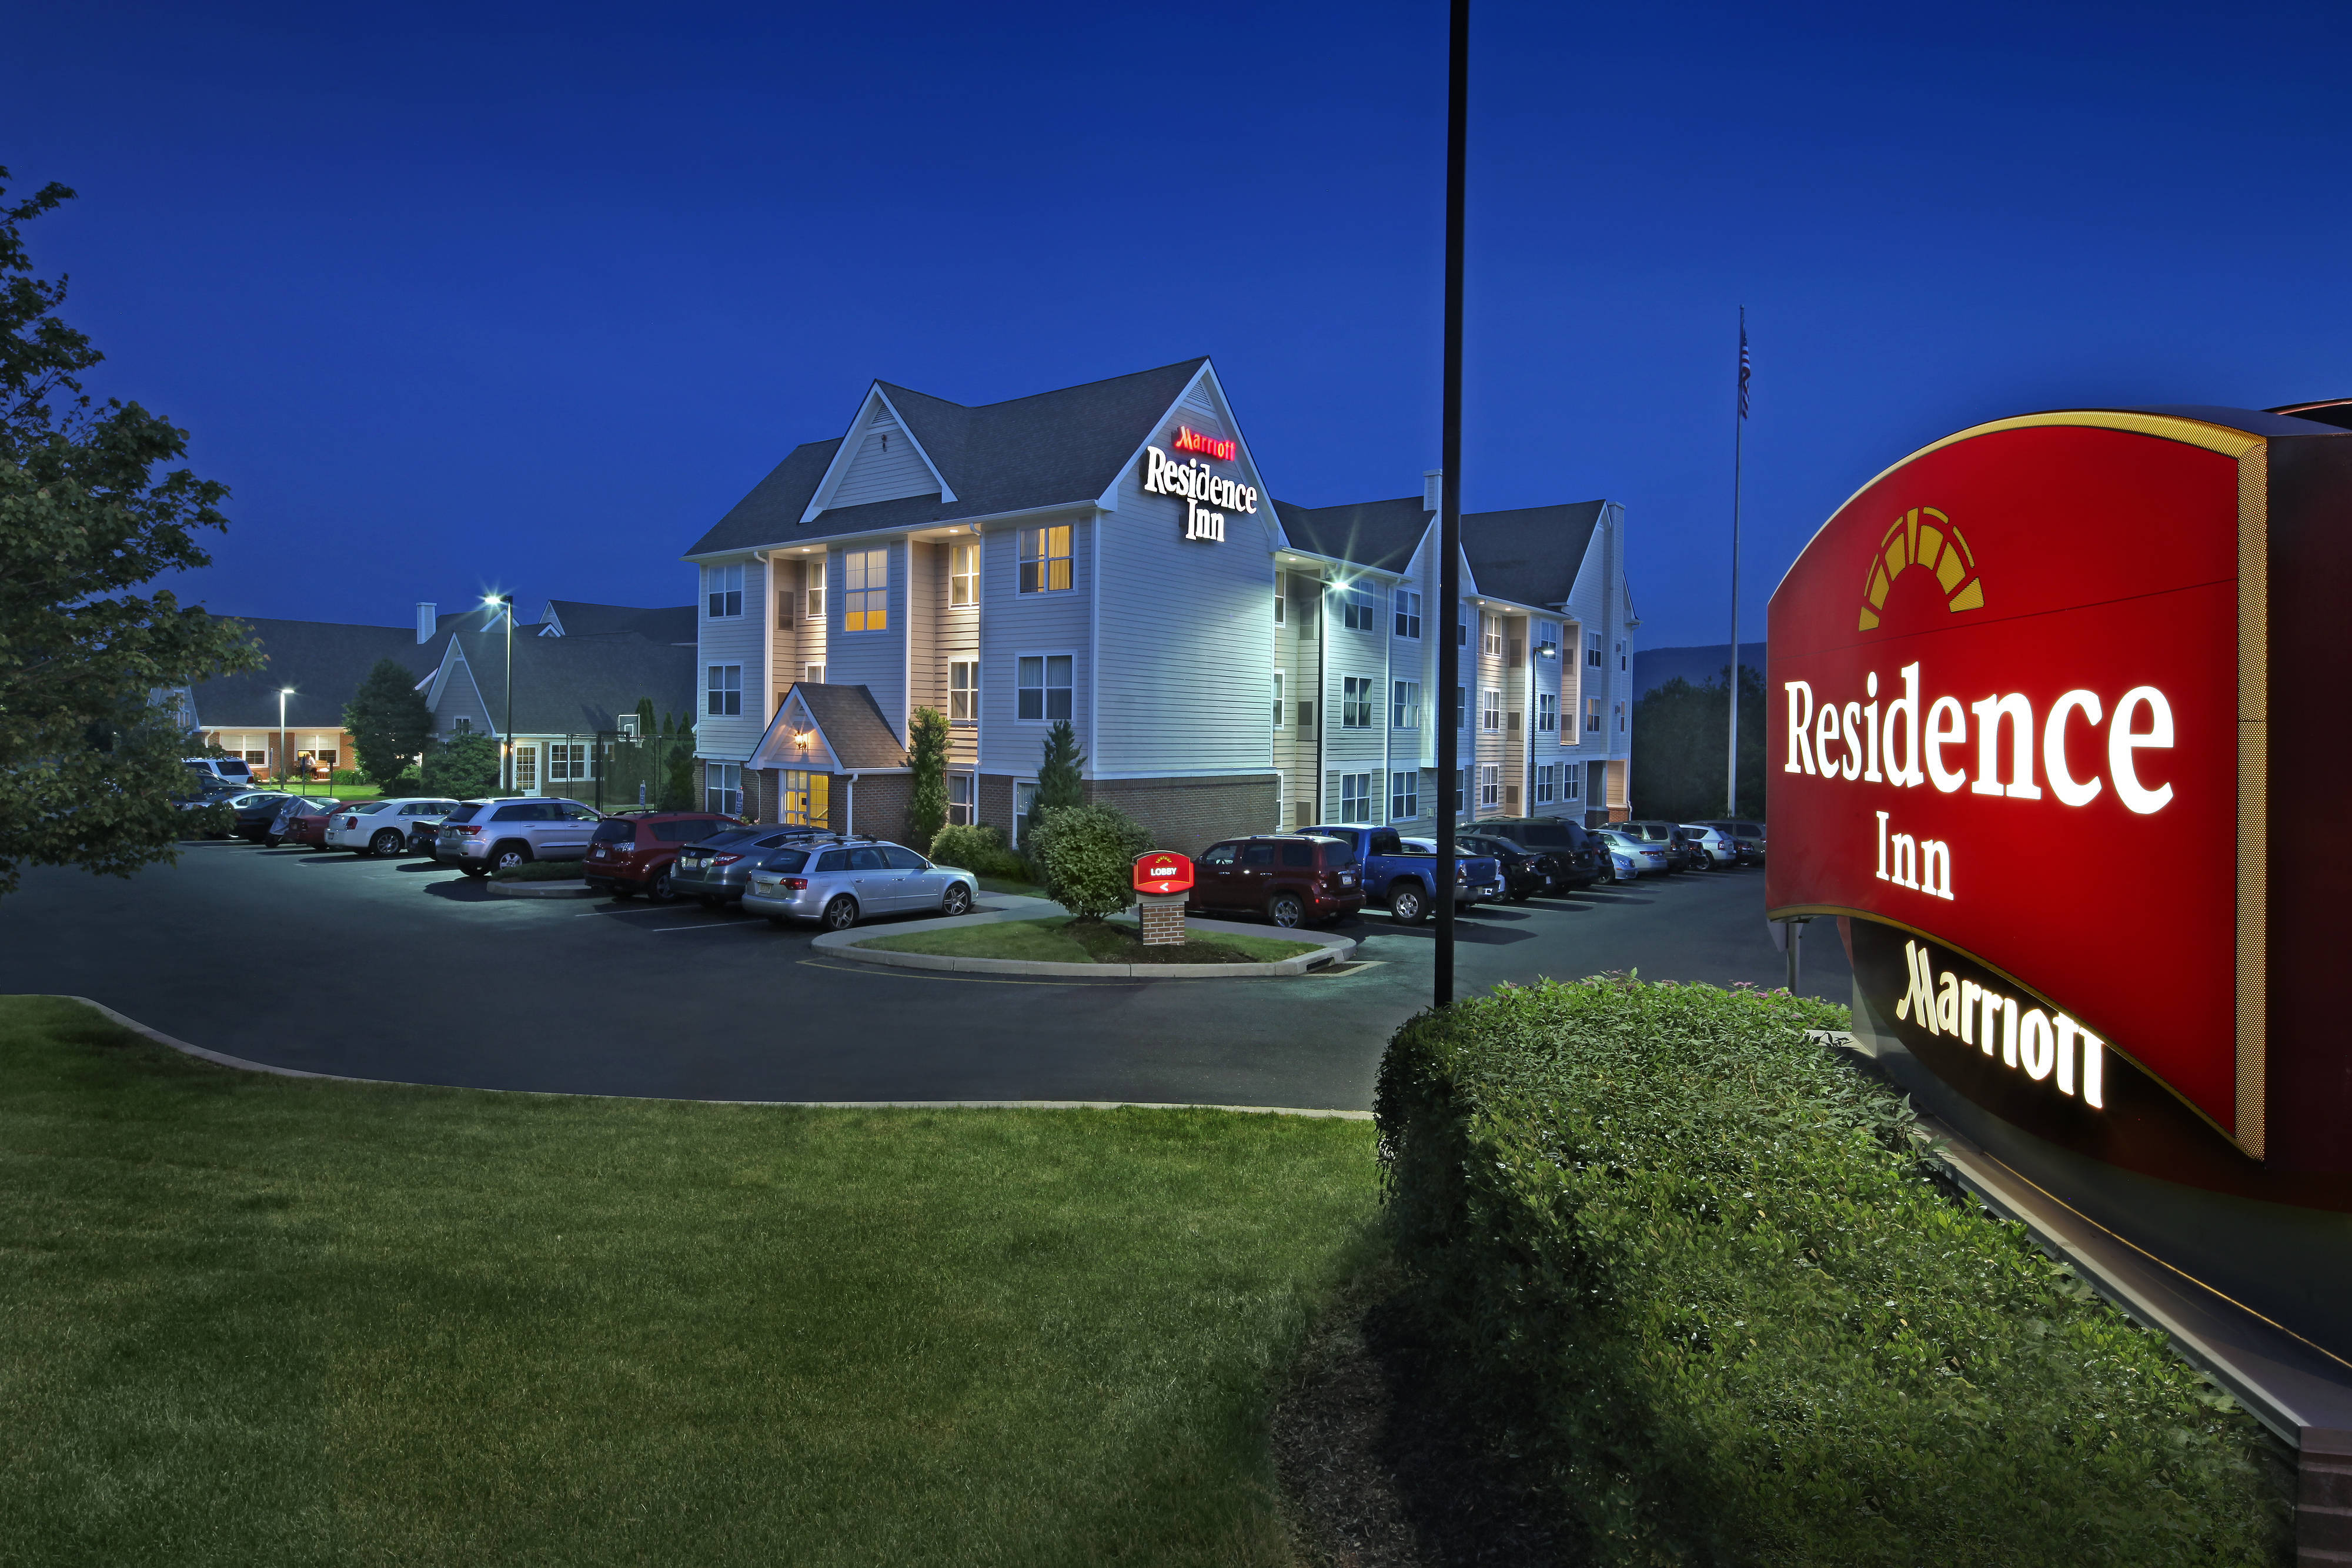 Photo of Residence Inn by Marriott Southington, Southington, CT